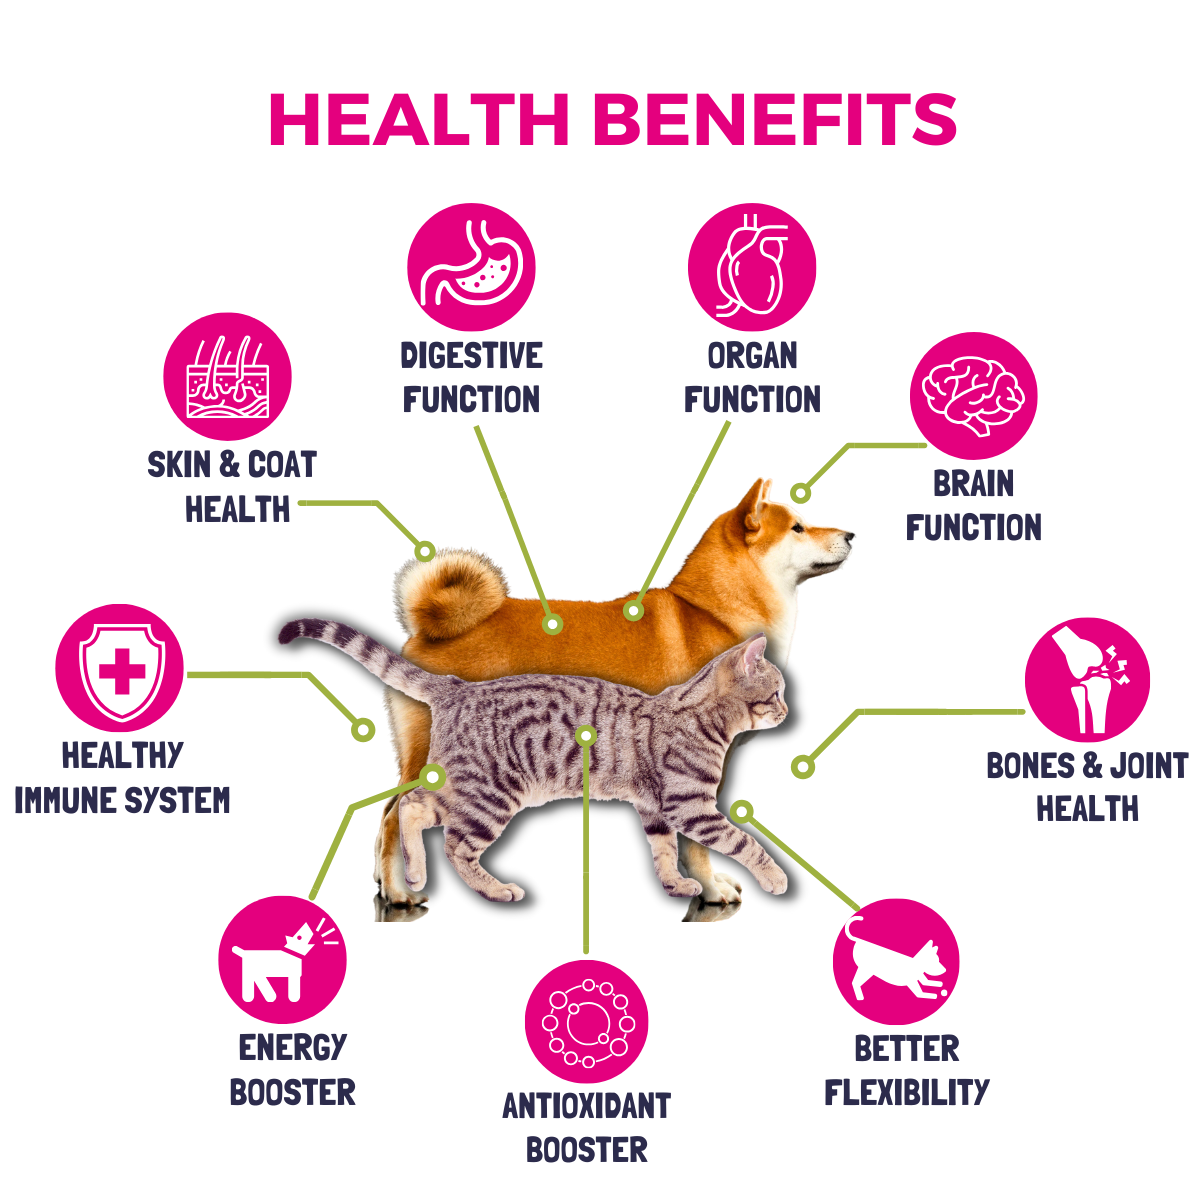 Pet Logic 10-in-1 Multivitamins 240g Dog & Cat Treats Supplement  Pet Vitamins for Pro Immune System